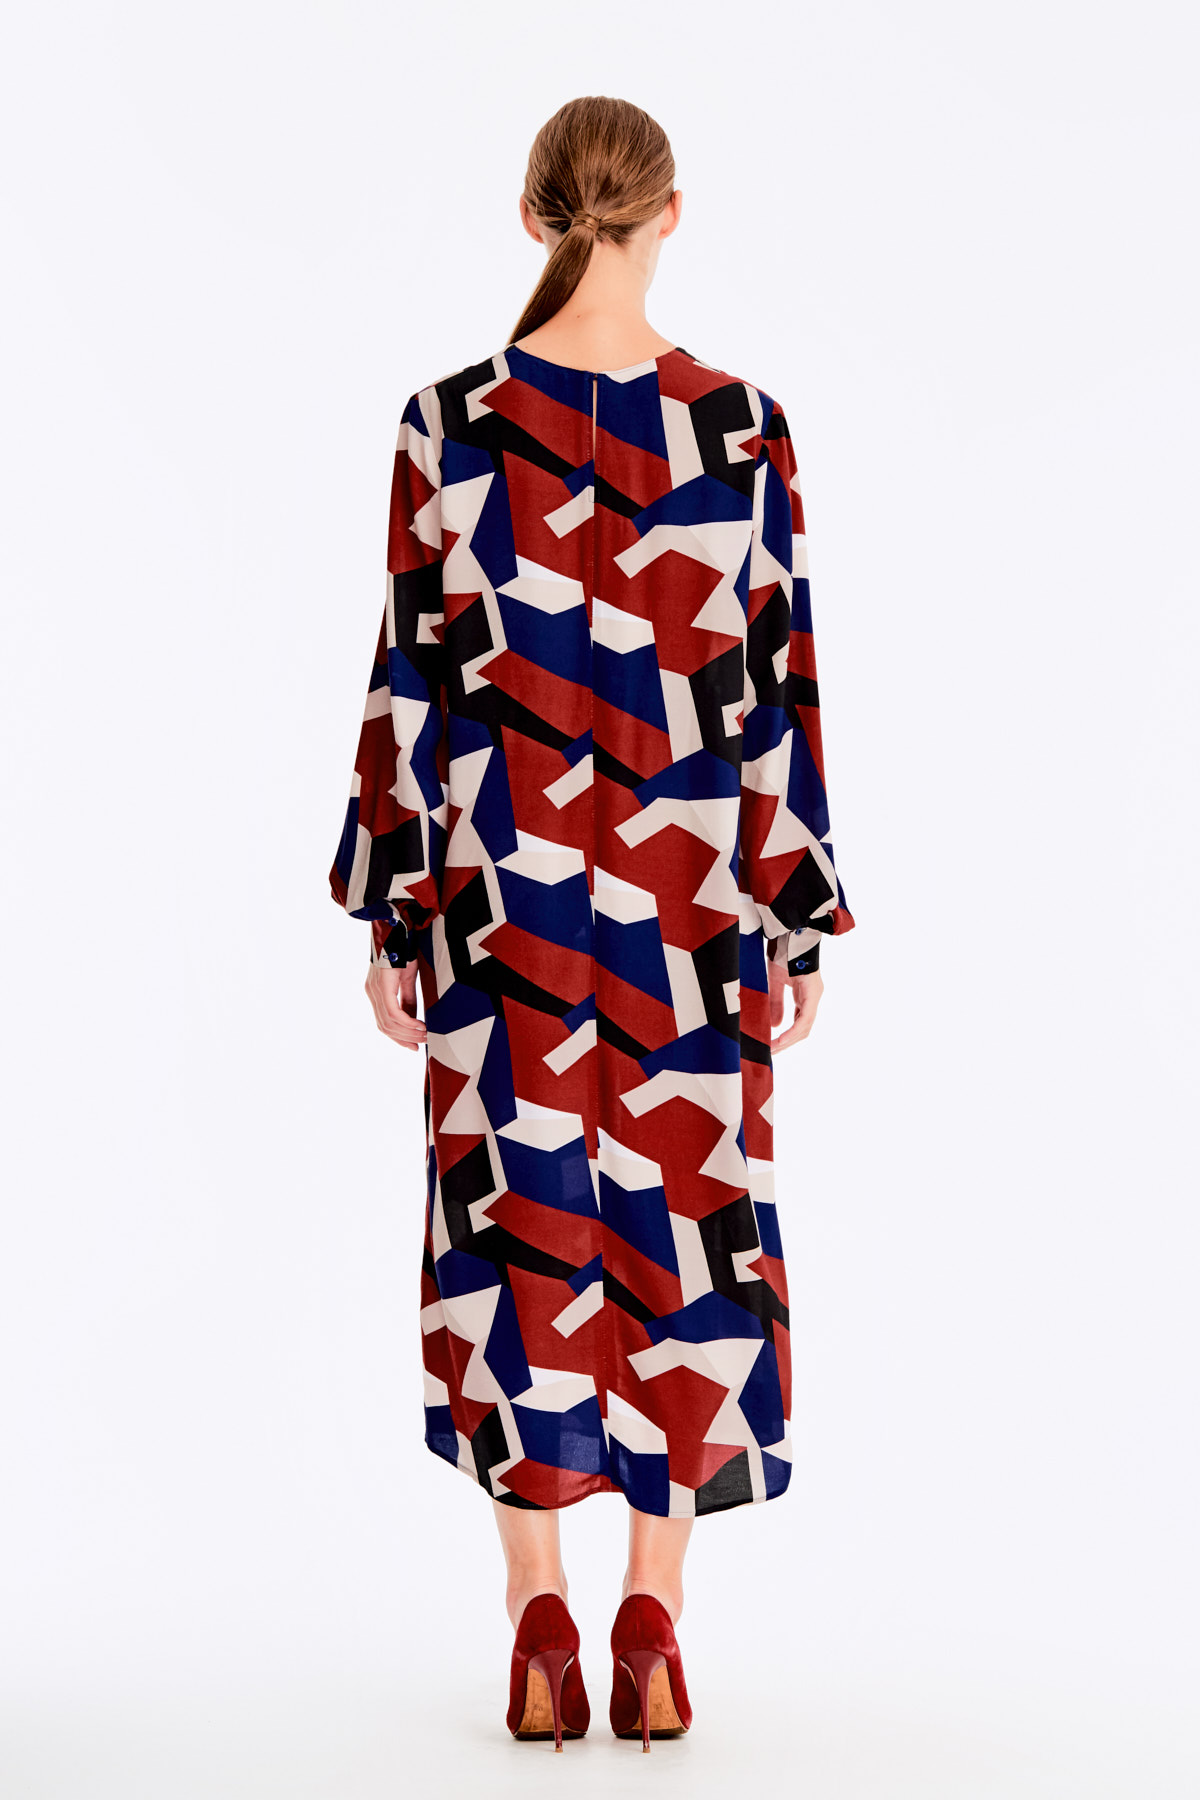 Free midi dress with variegated geometric print ¶¶, photo 11